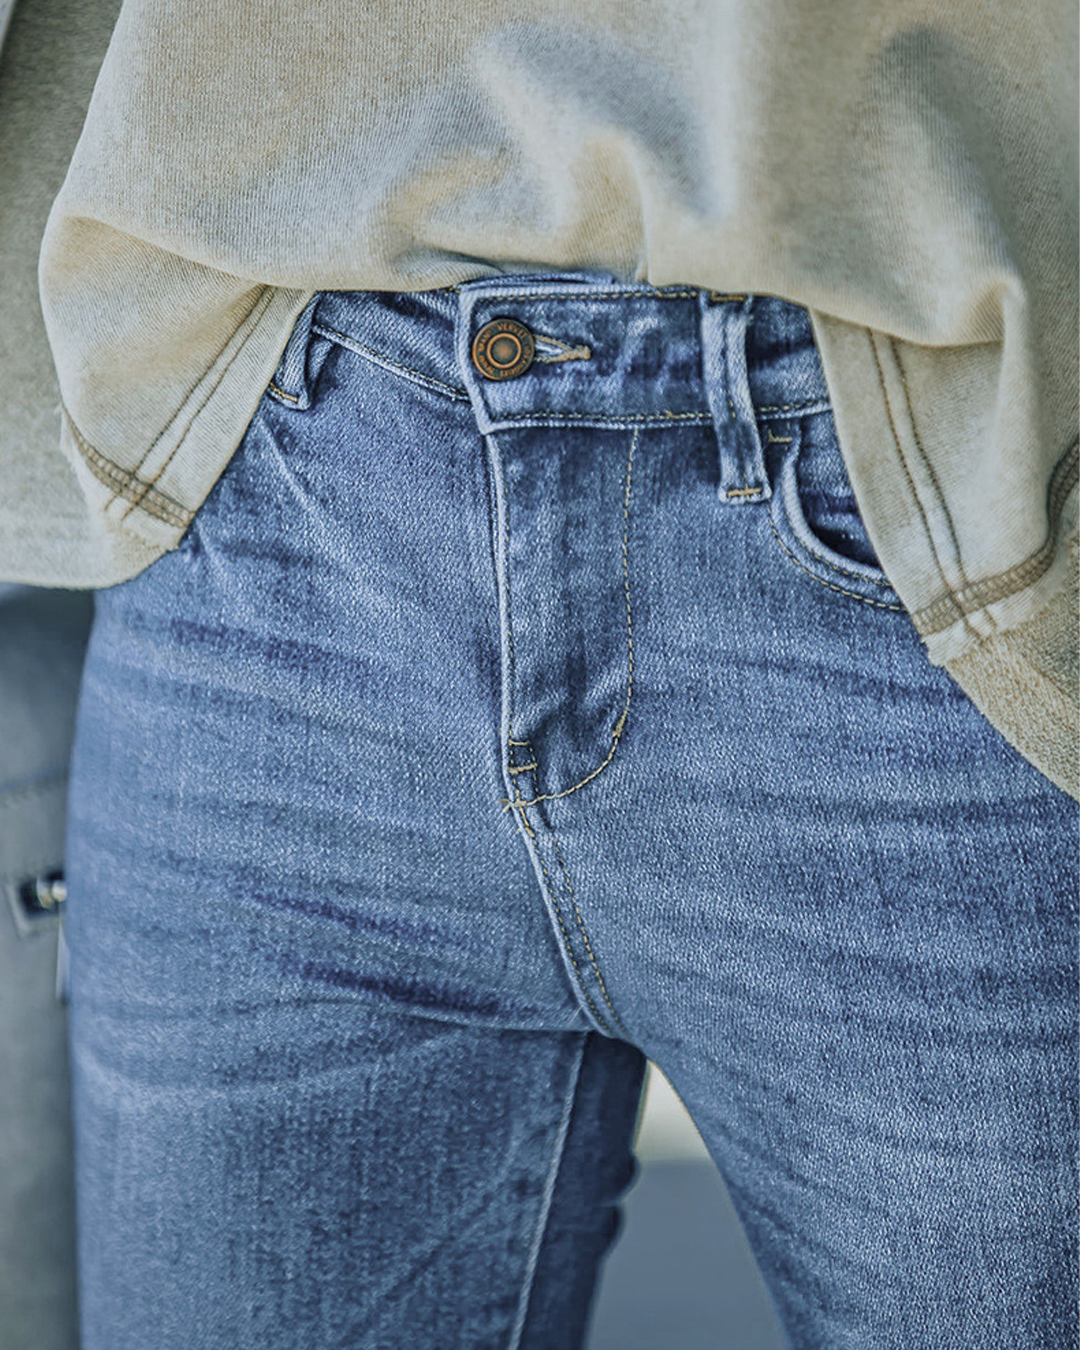 Lismali Classic Mid-Rise Flare Jeans